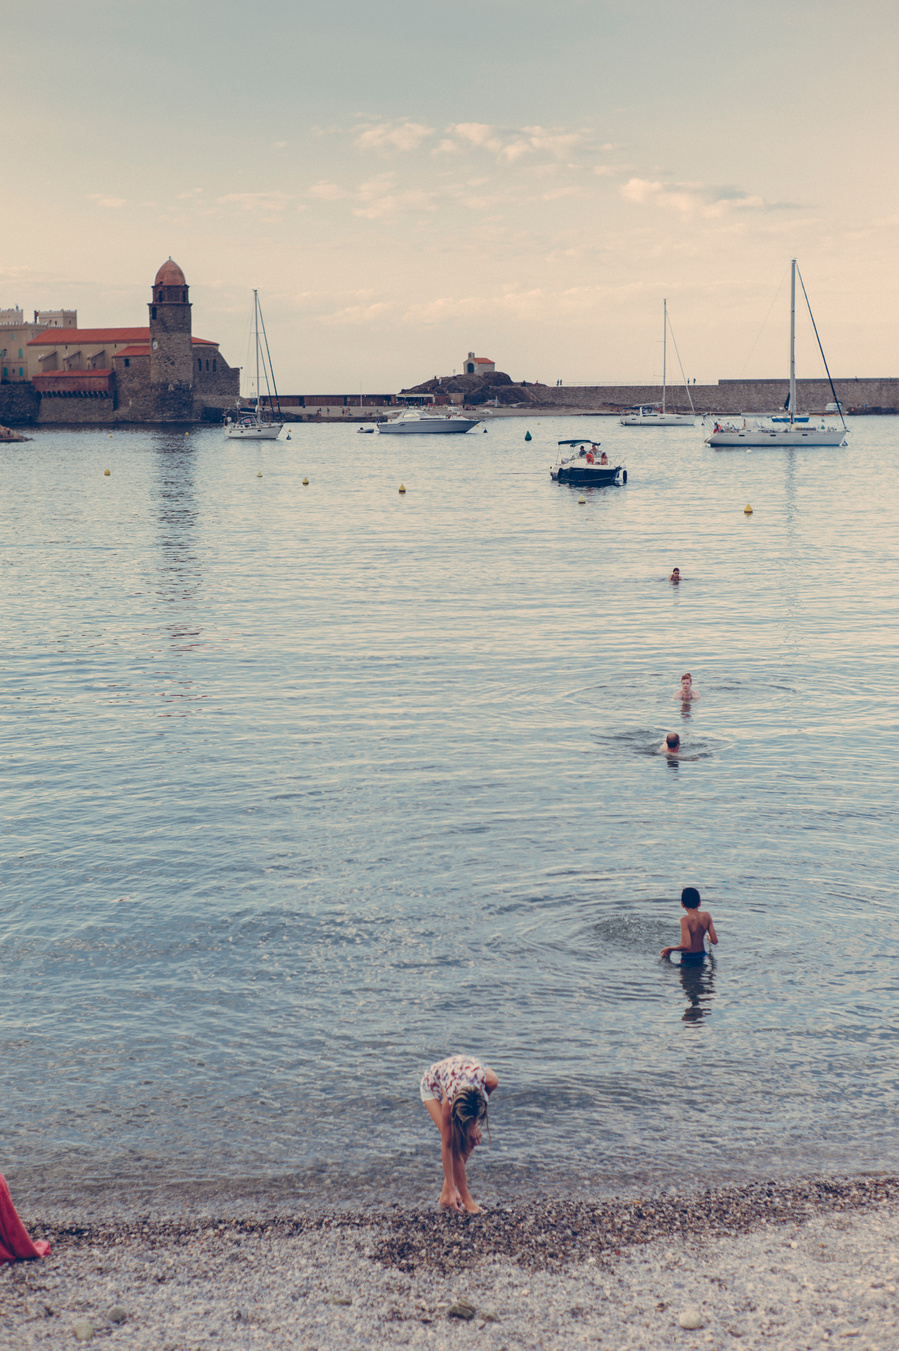 Photograph taken in Collioure, France, - Mediterranean coast, 2014.